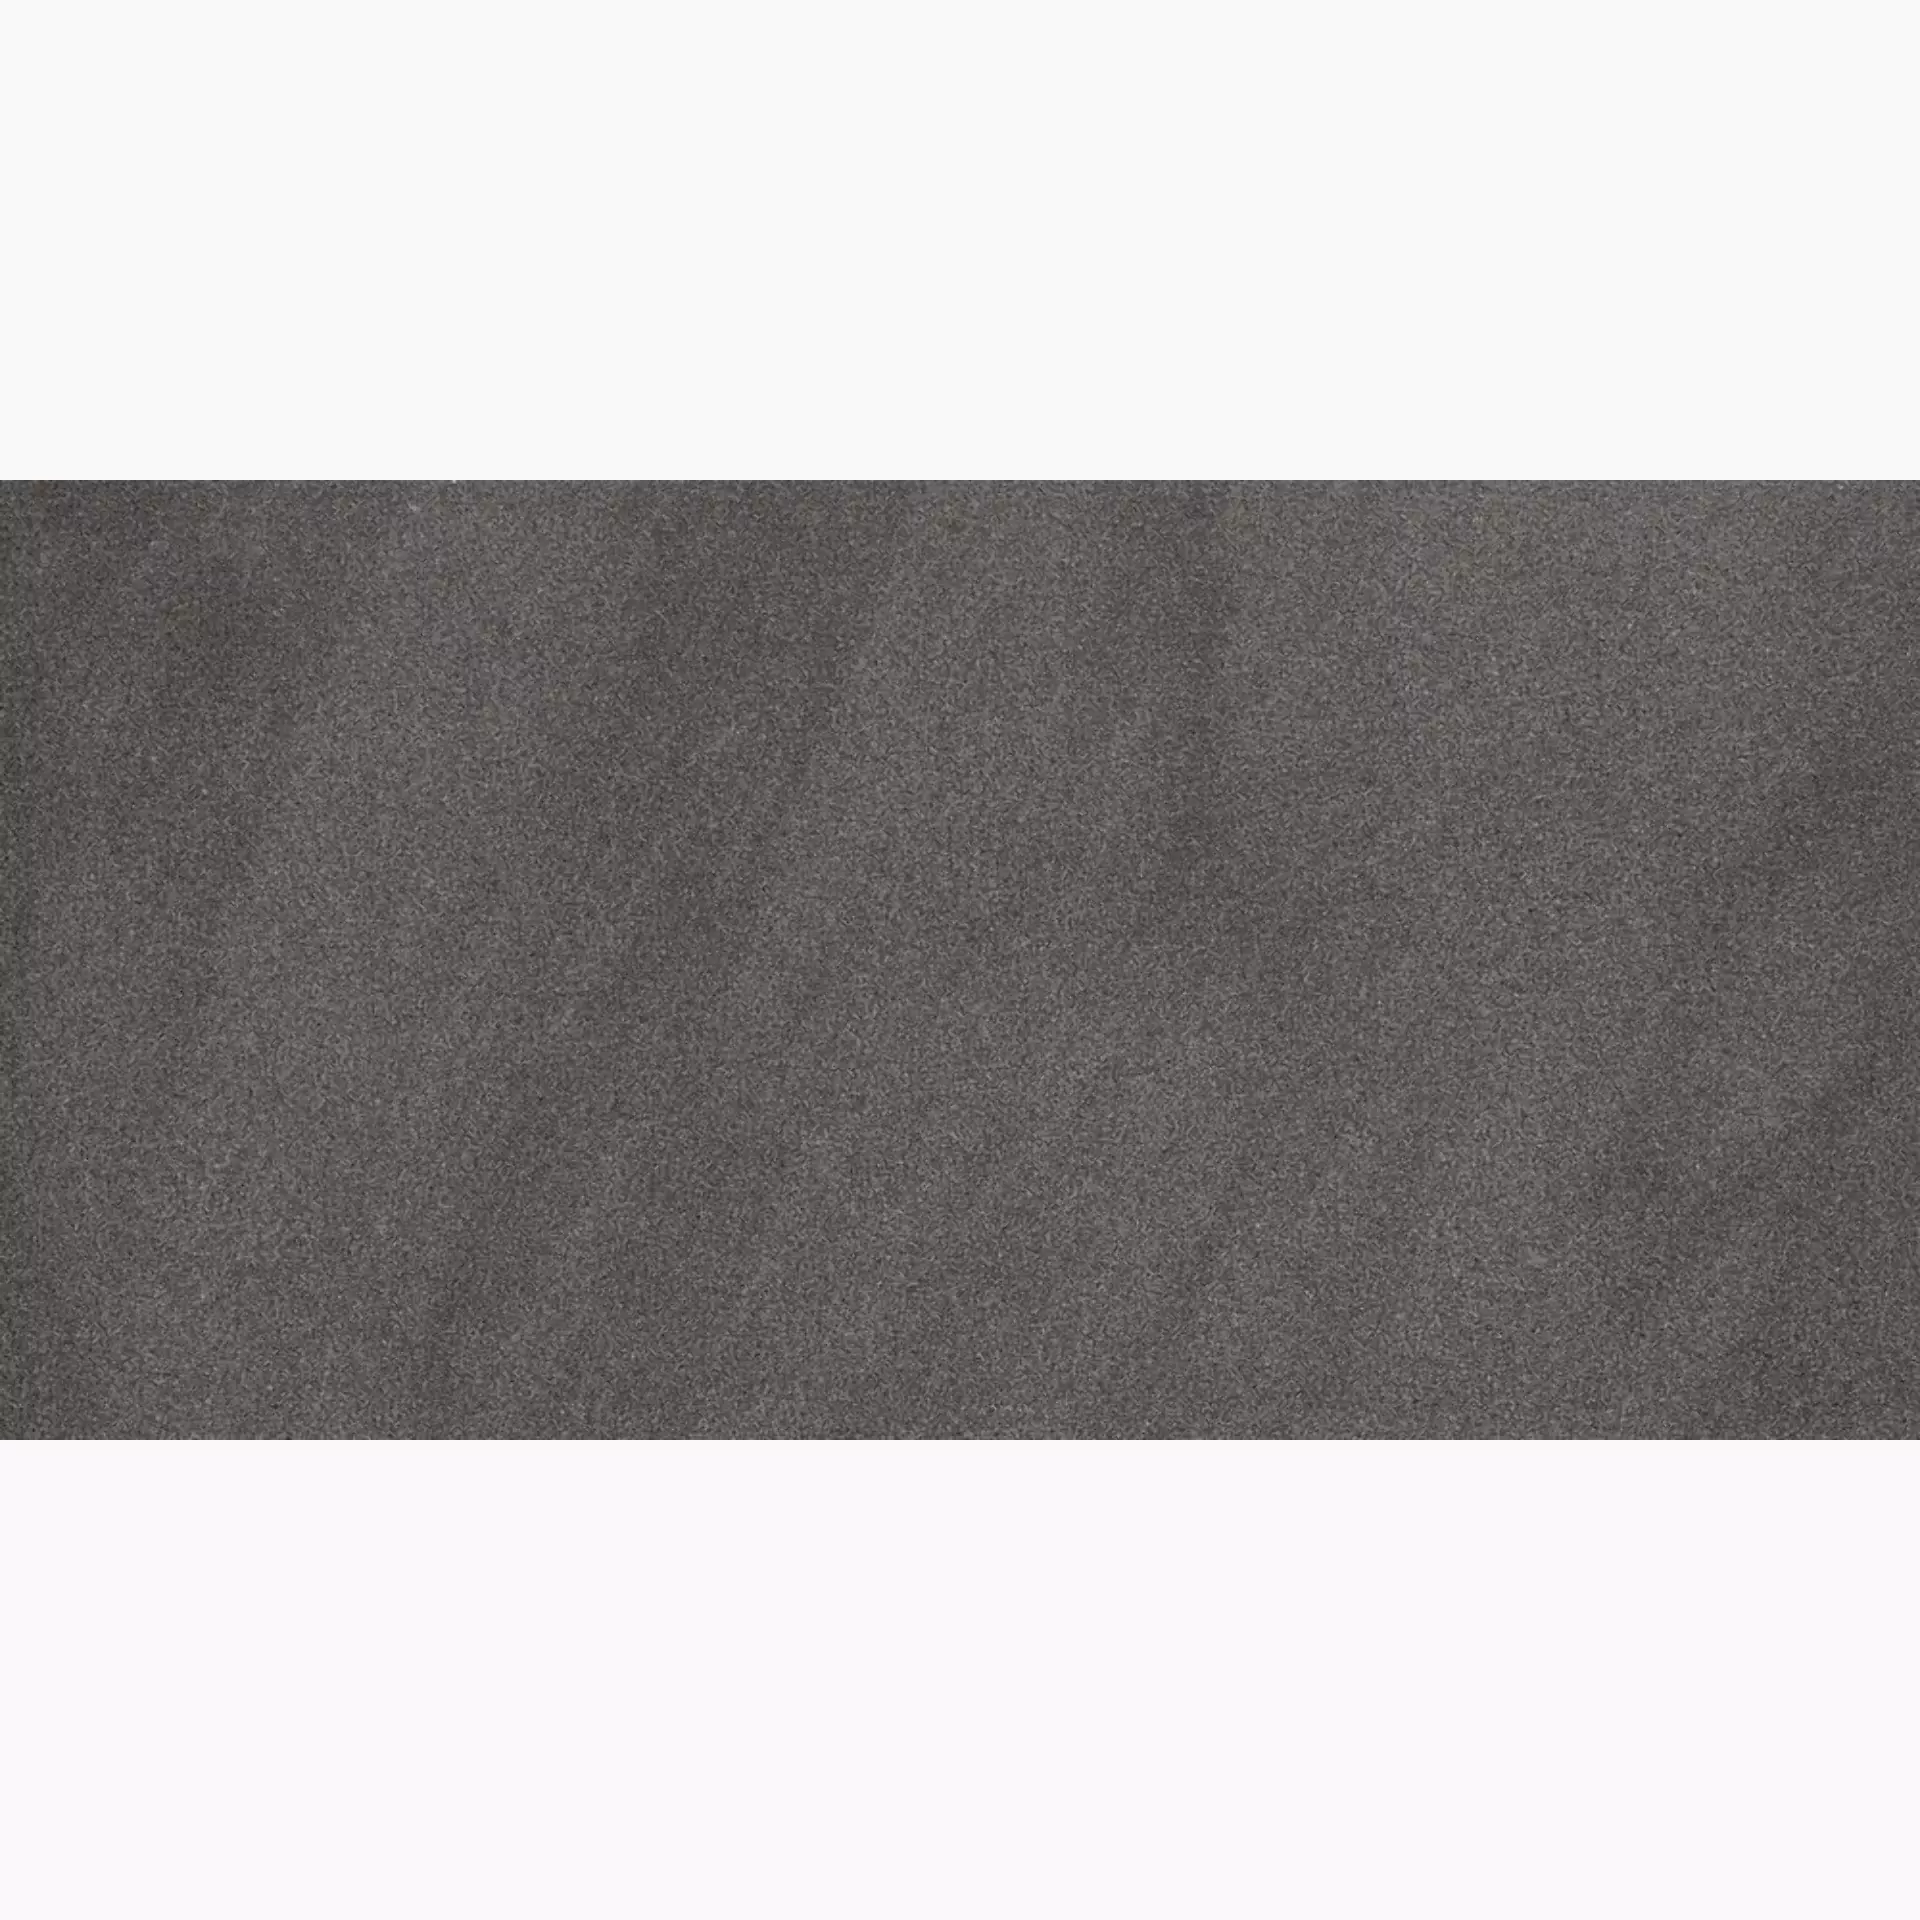 Coem Silverstone Liscio Graphite Naturale 0SS627R 60x120cm rectified 10mm